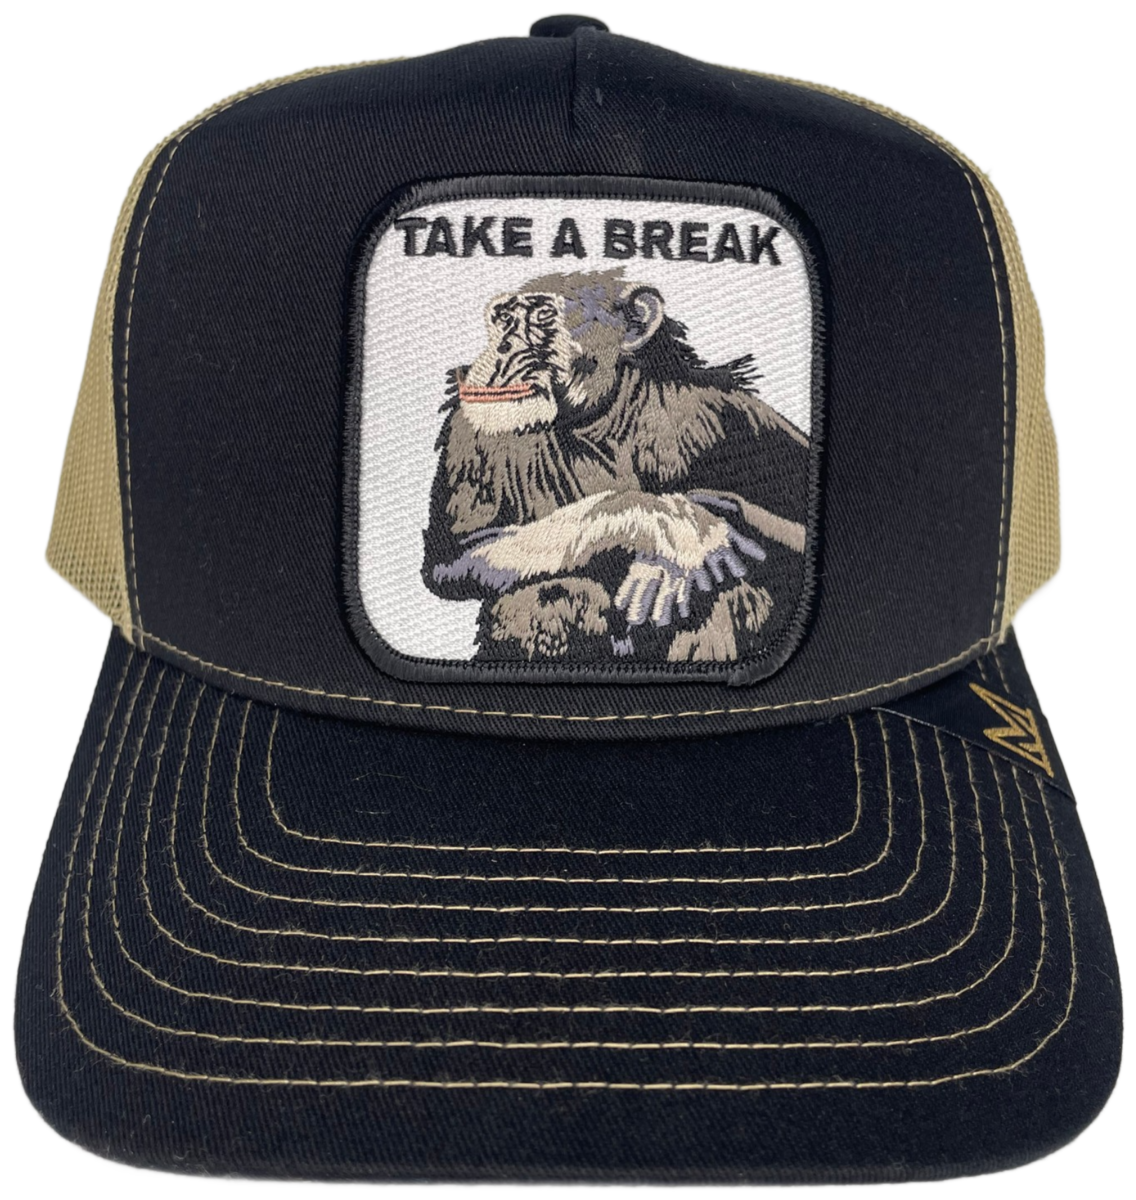 MV Dad Hats - Take A Break Trucker Hat - Black/Khaki